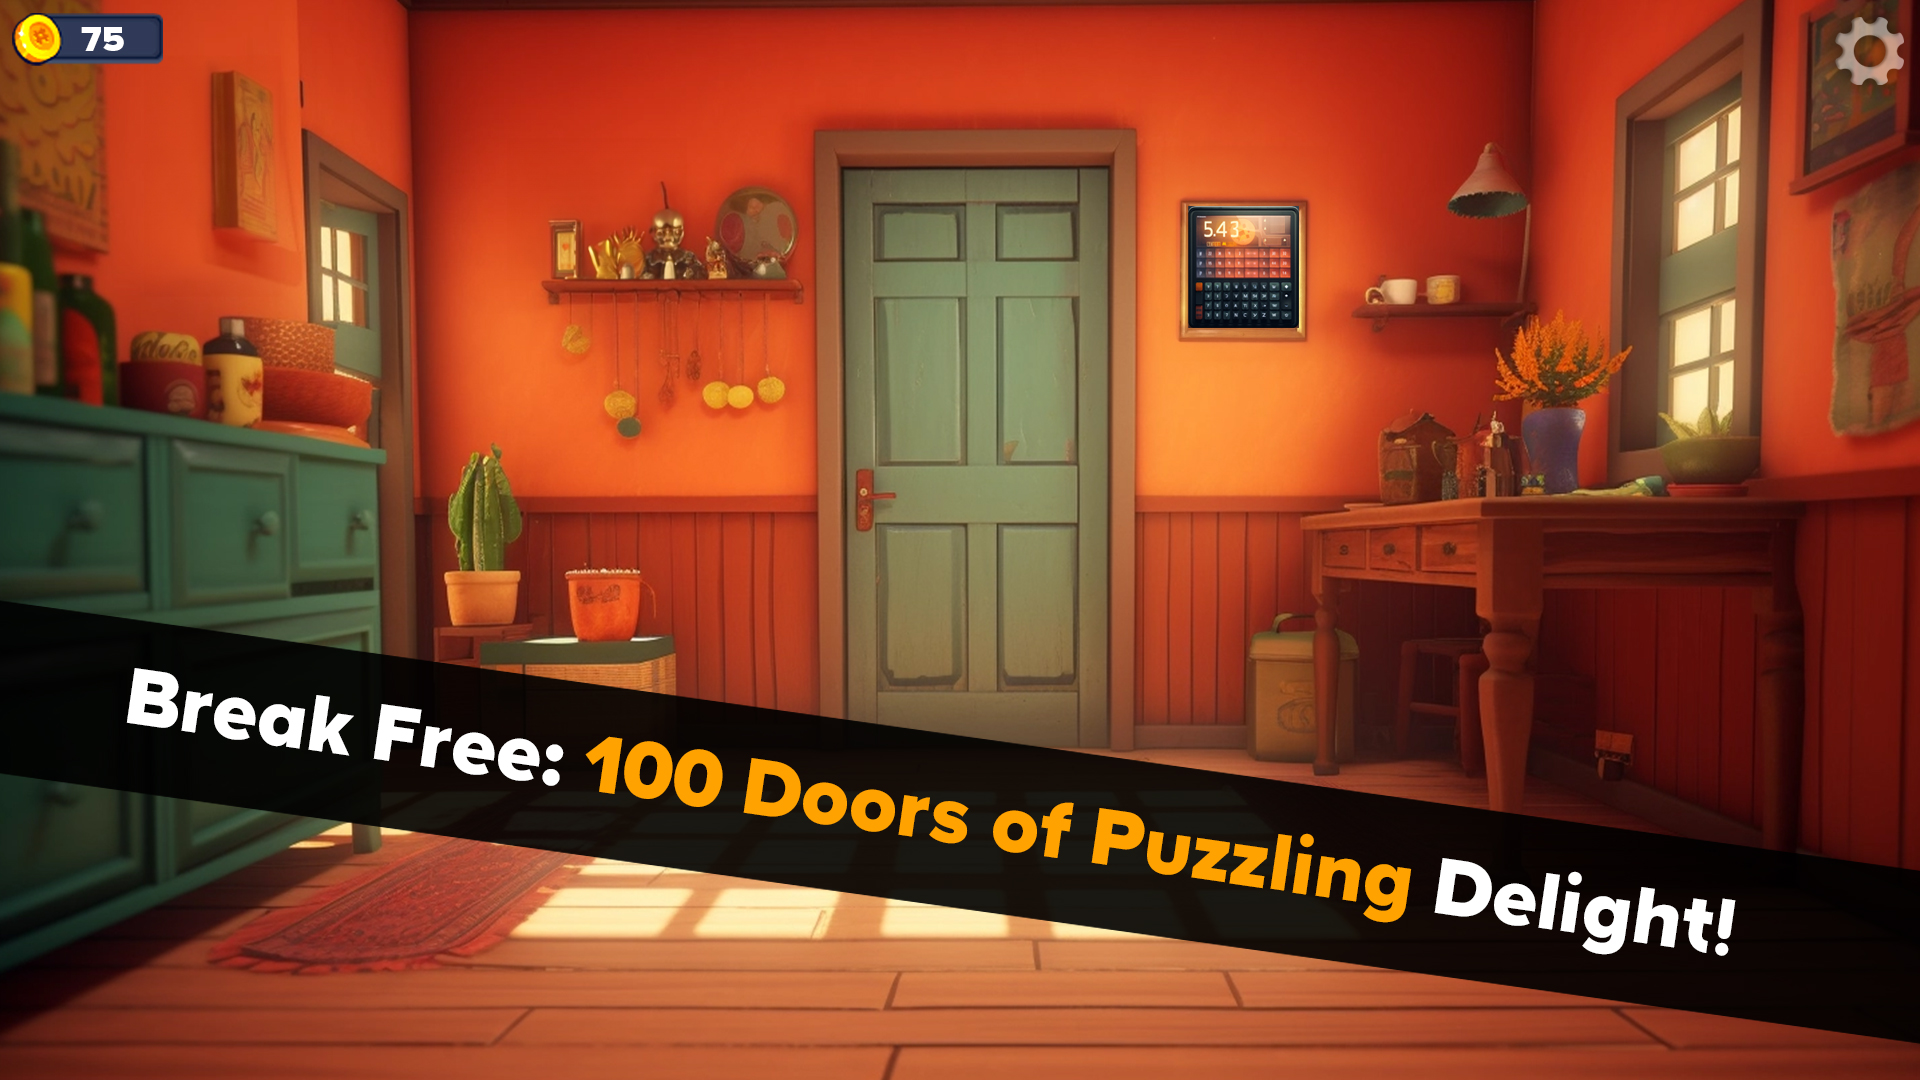 100 Doors Escape Game - 1